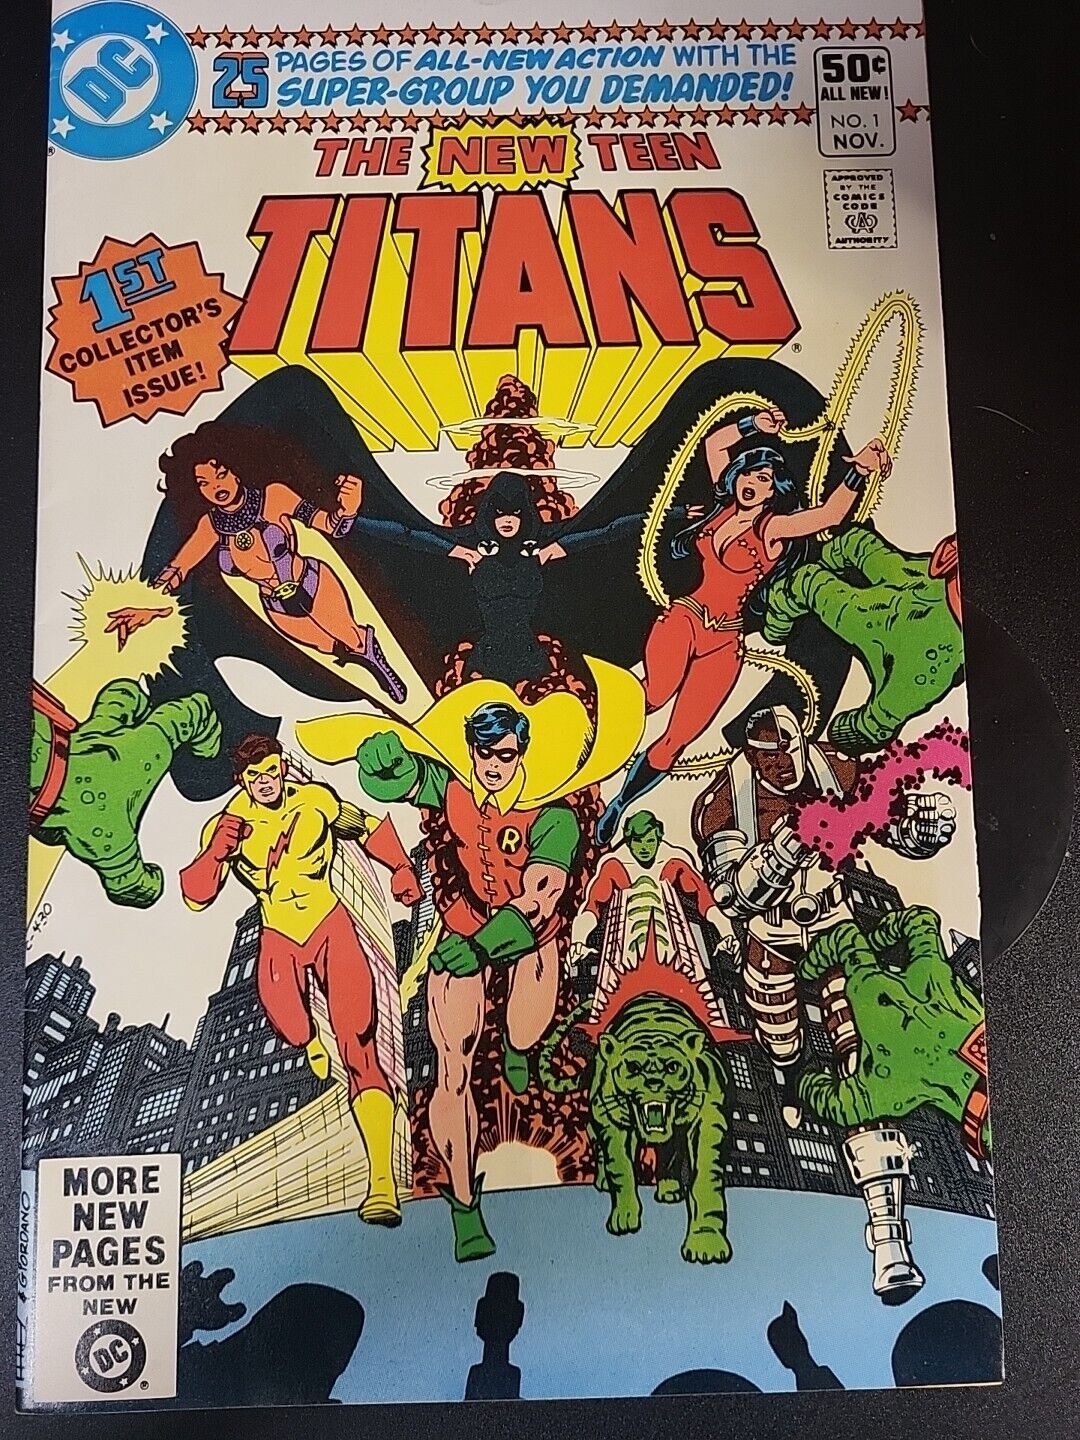 THE NEW TEEN TITANS #1 1980 George Perez Art Raven Starfire Cyborg DC Comic Book